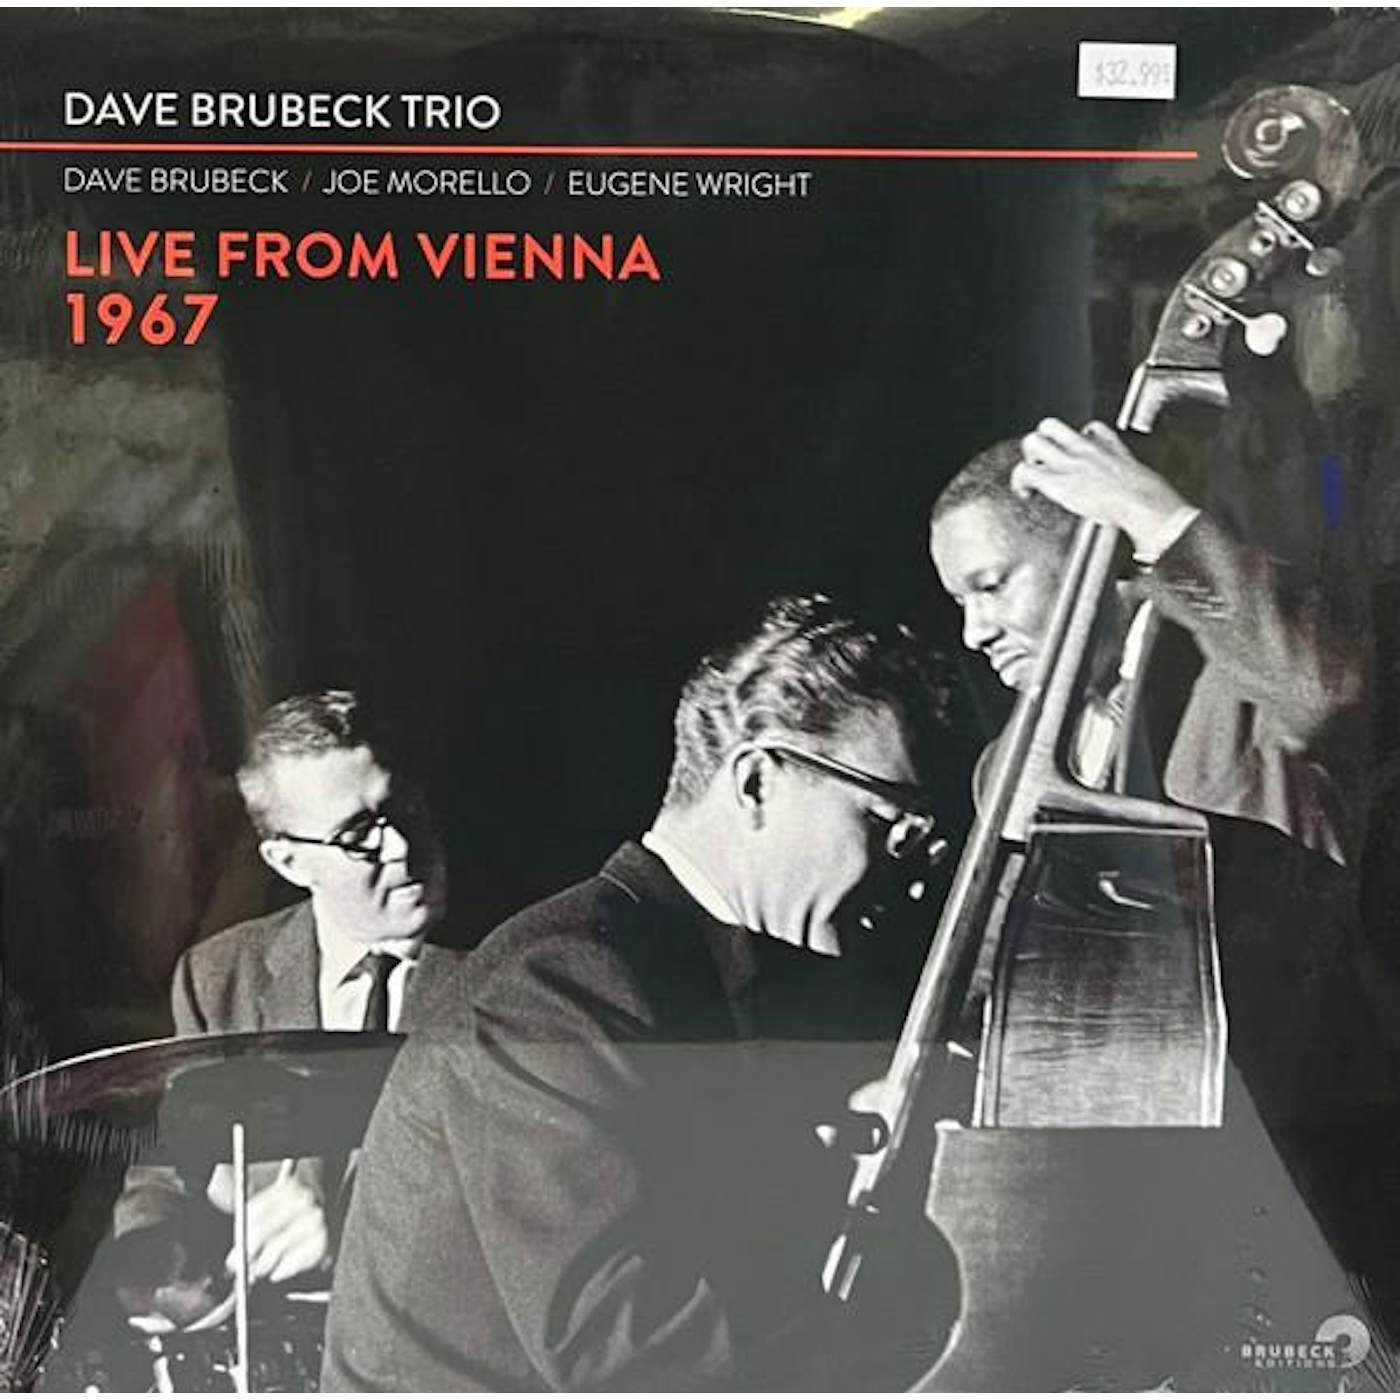 Dave Brubeck LIVE FROM VIENNA 1967 (180G) (RSD) Vinyl Record